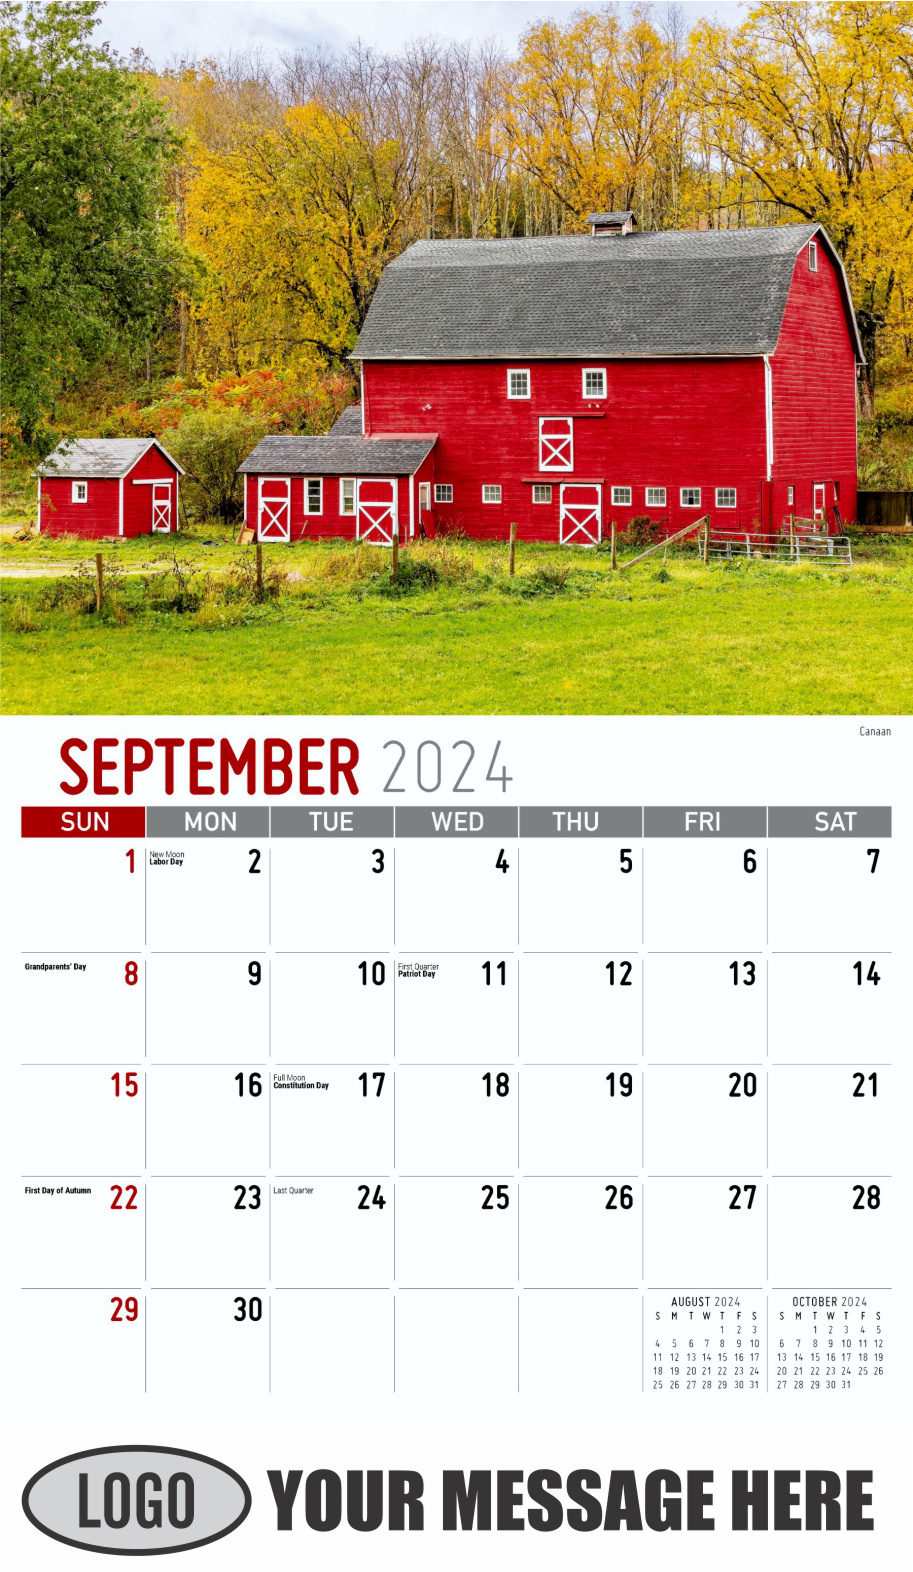 Scenes of New York 2024 Business Promotional Wall Calendar - September